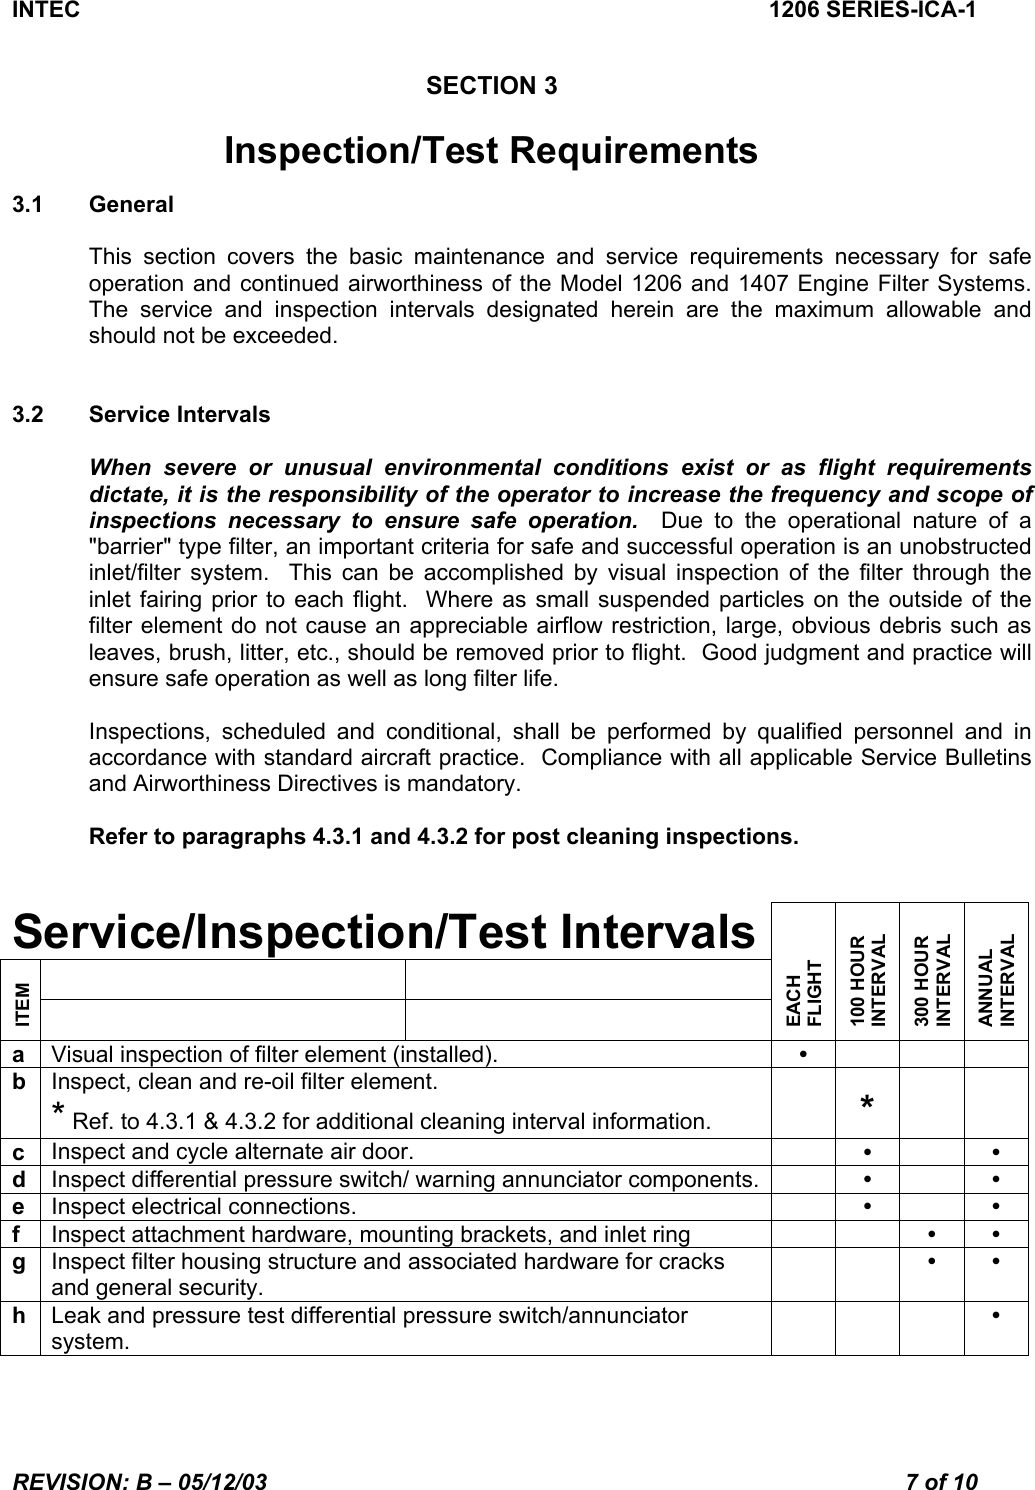 Page 7 of 10 - Intec Intec-Stc-Sr00180Se-Users-Manual 1206 SERIES-ICA-1 Rev B